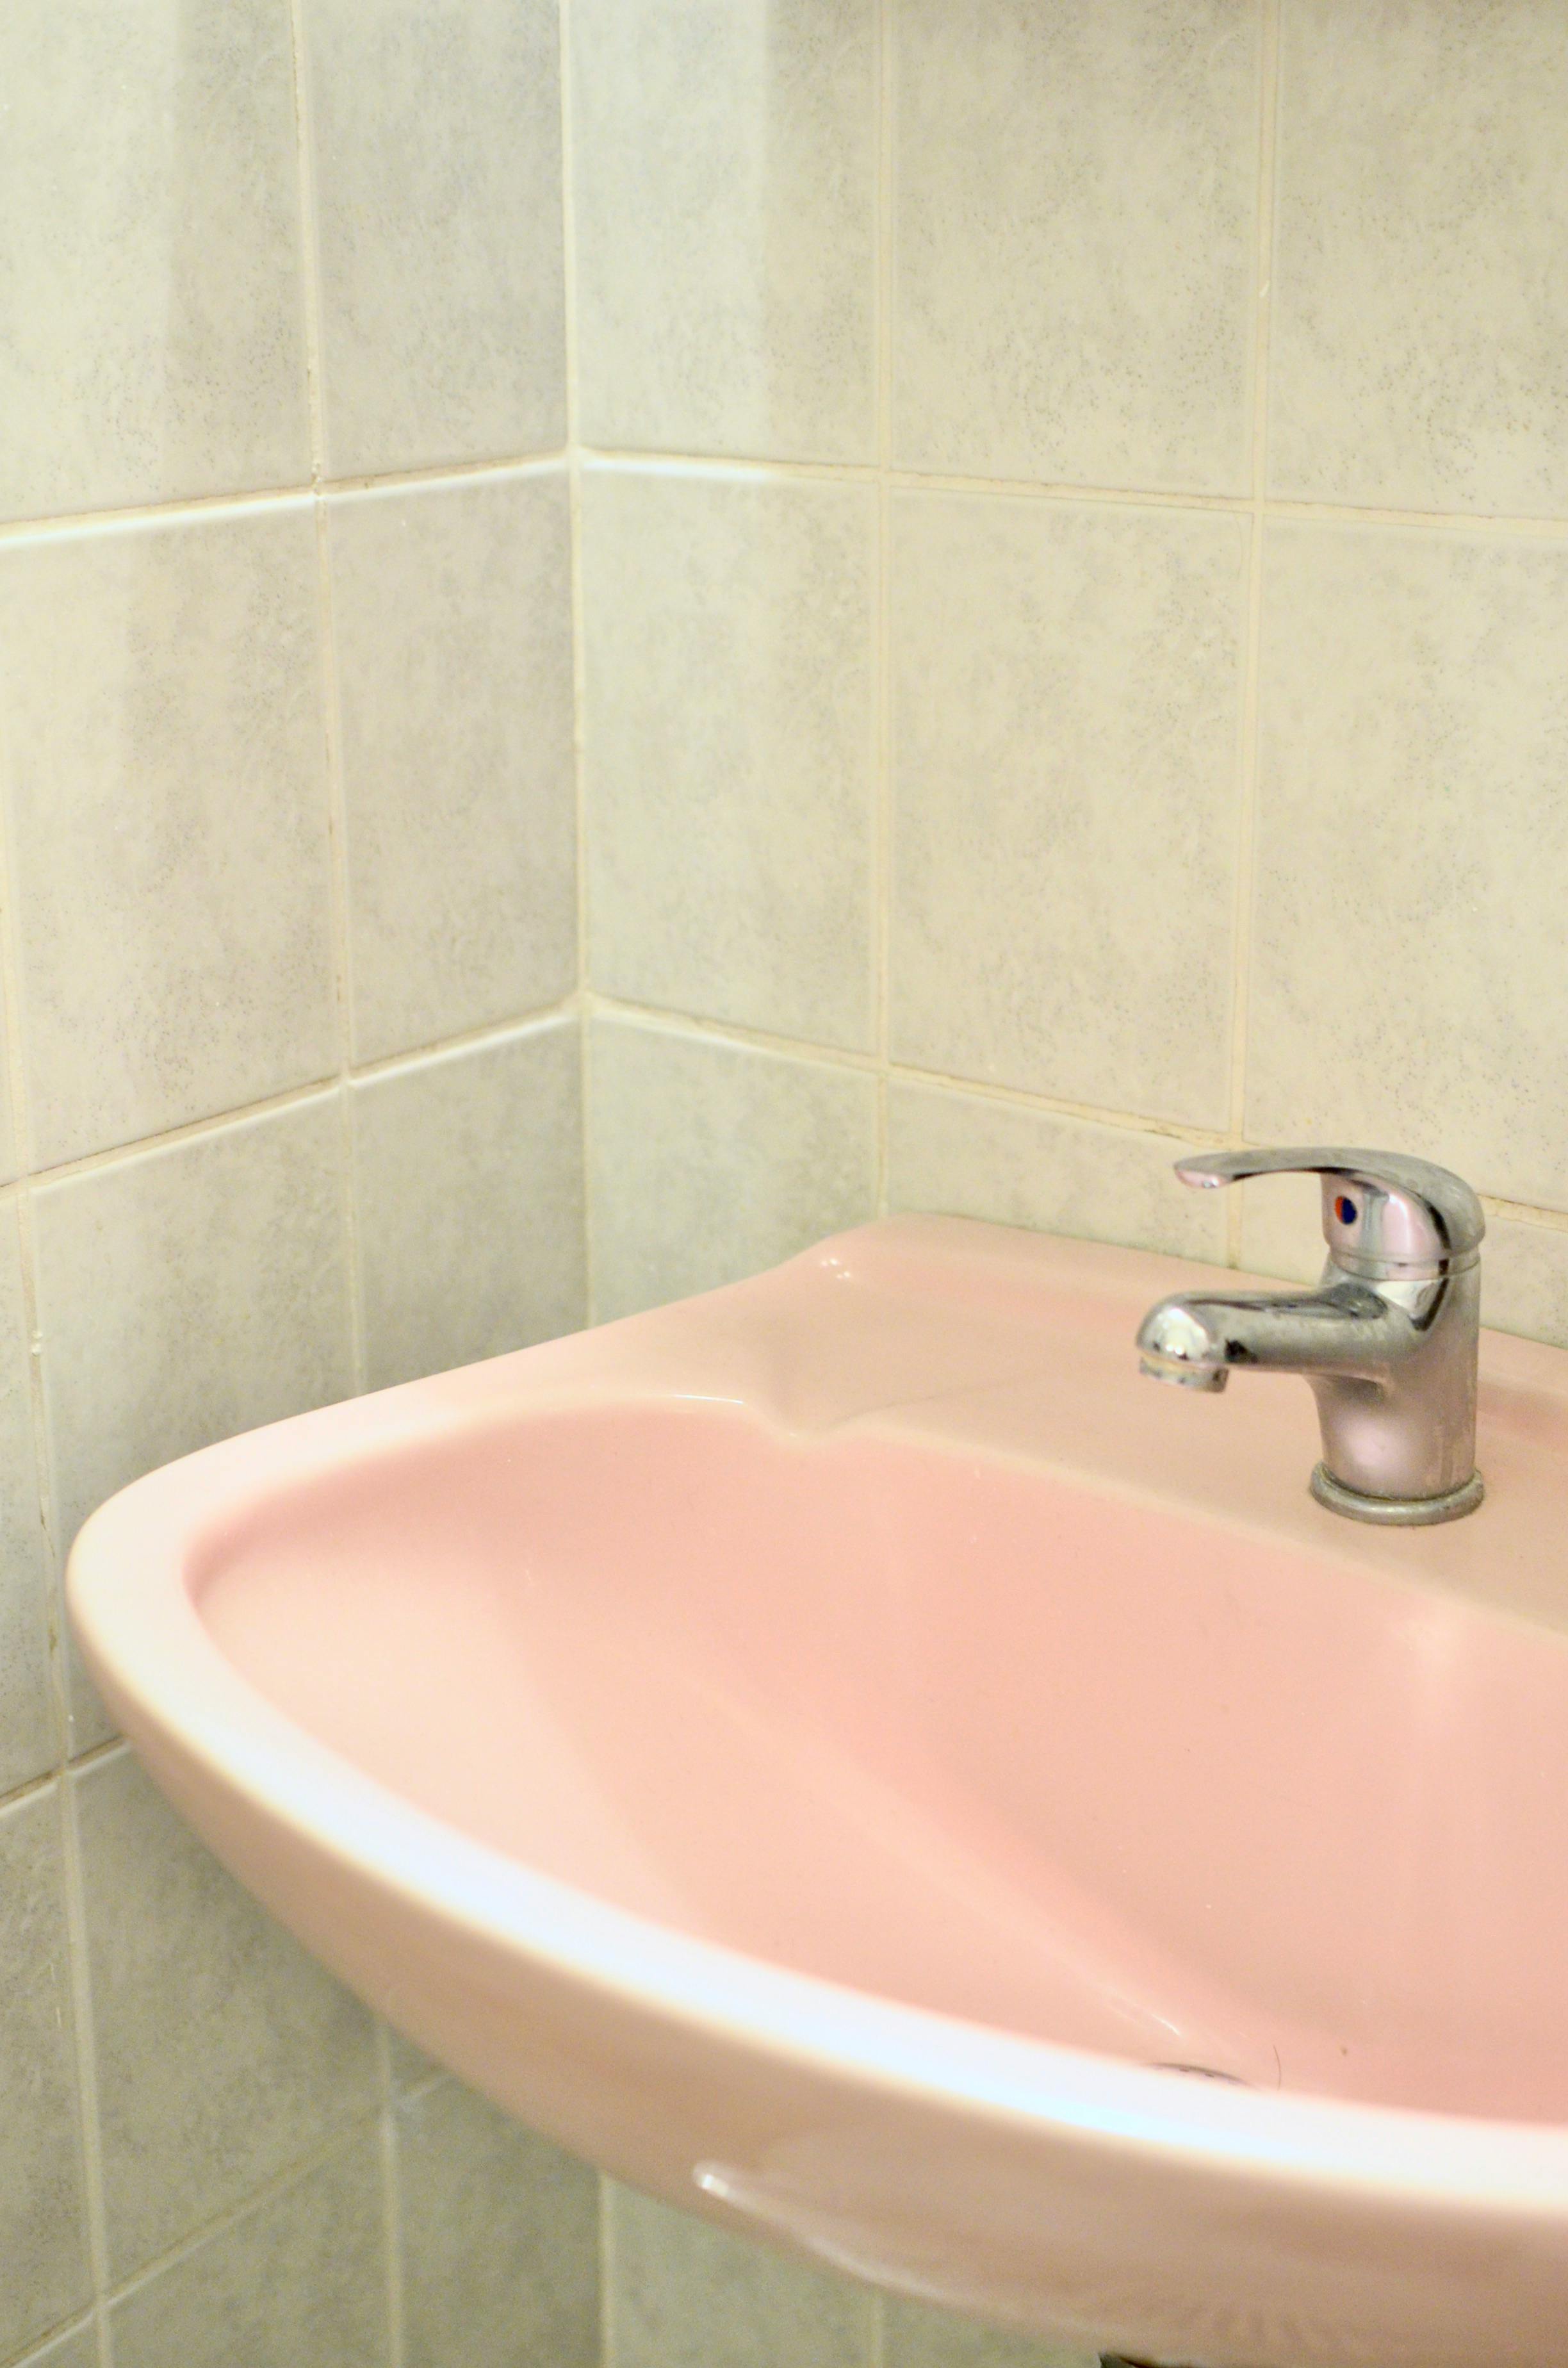 pink sink in bathroom near wall